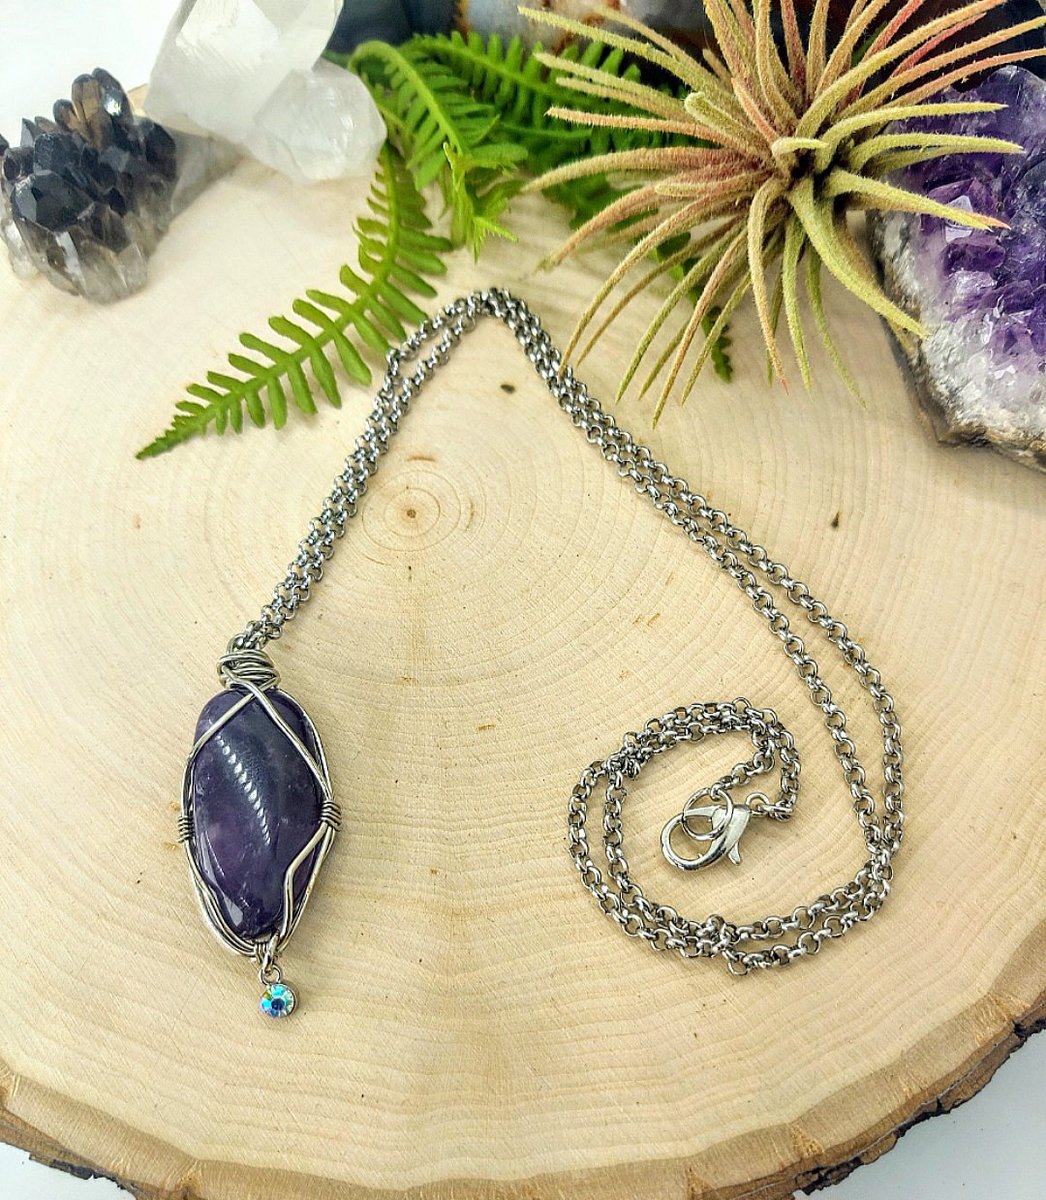 Wire Wrapped tumbled Amethyst Stone Necklace💜

⬇️🔗 #EtsyShop 🔗⬇️

#Amethyst #Gemstones #yoga #purple #stones #crystals #handmadejewelry #fashion #etsy #etsyfinds #ootd #necklaces #jewelry #onlineshopping #gems #gypsy #gypsystyle #bohohippie